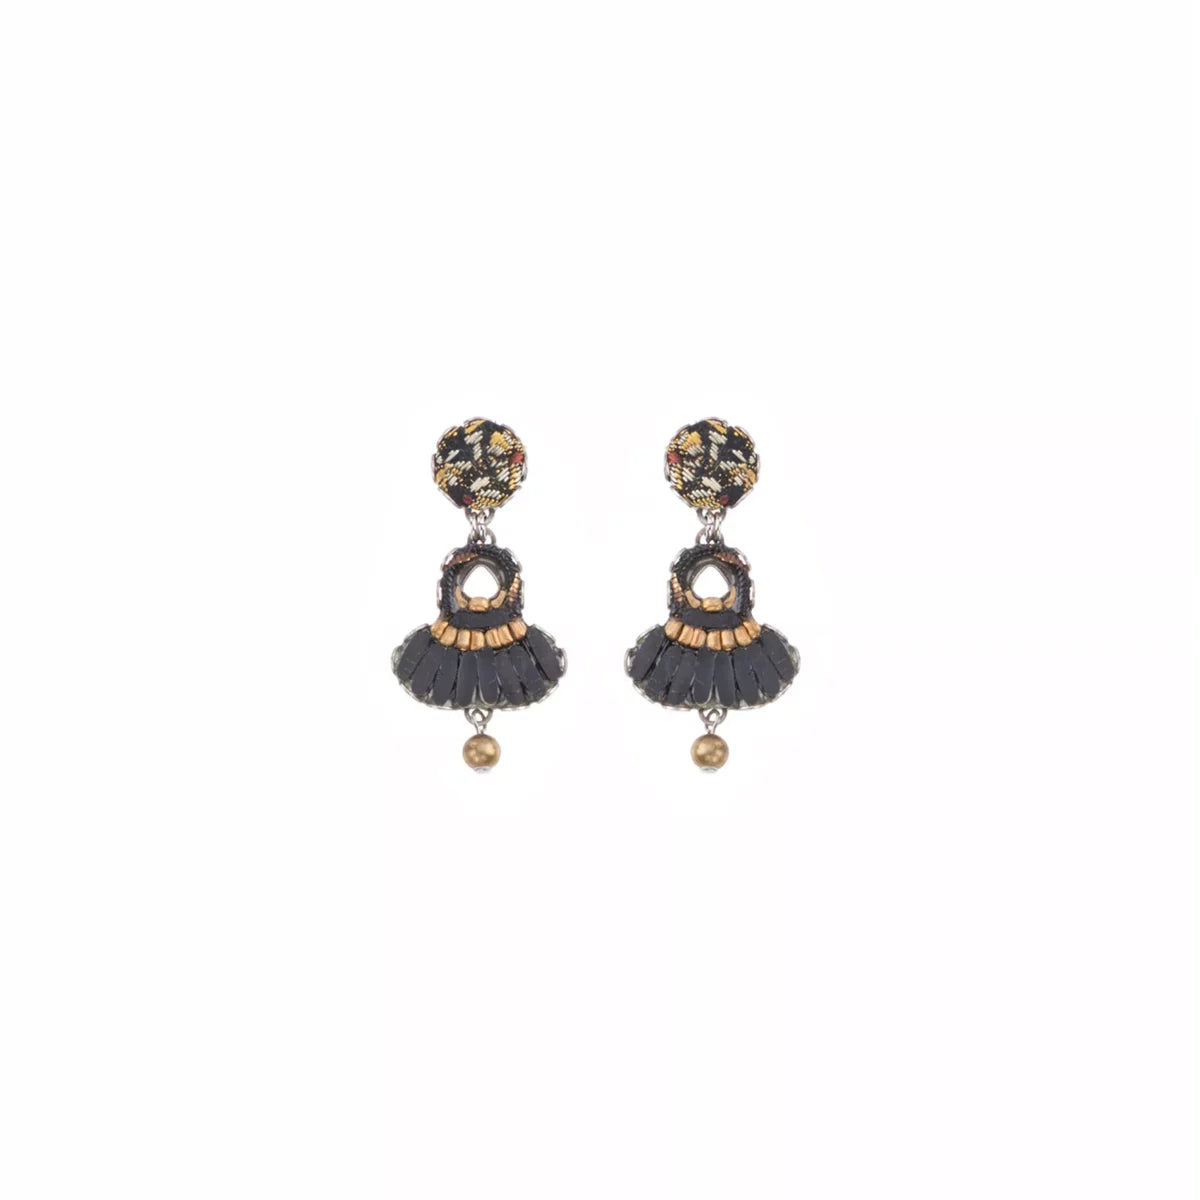 Royalty Mirtha Earrings - The Nancy Smillie Shop - Art, Jewellery & Designer Gifts Glasgow